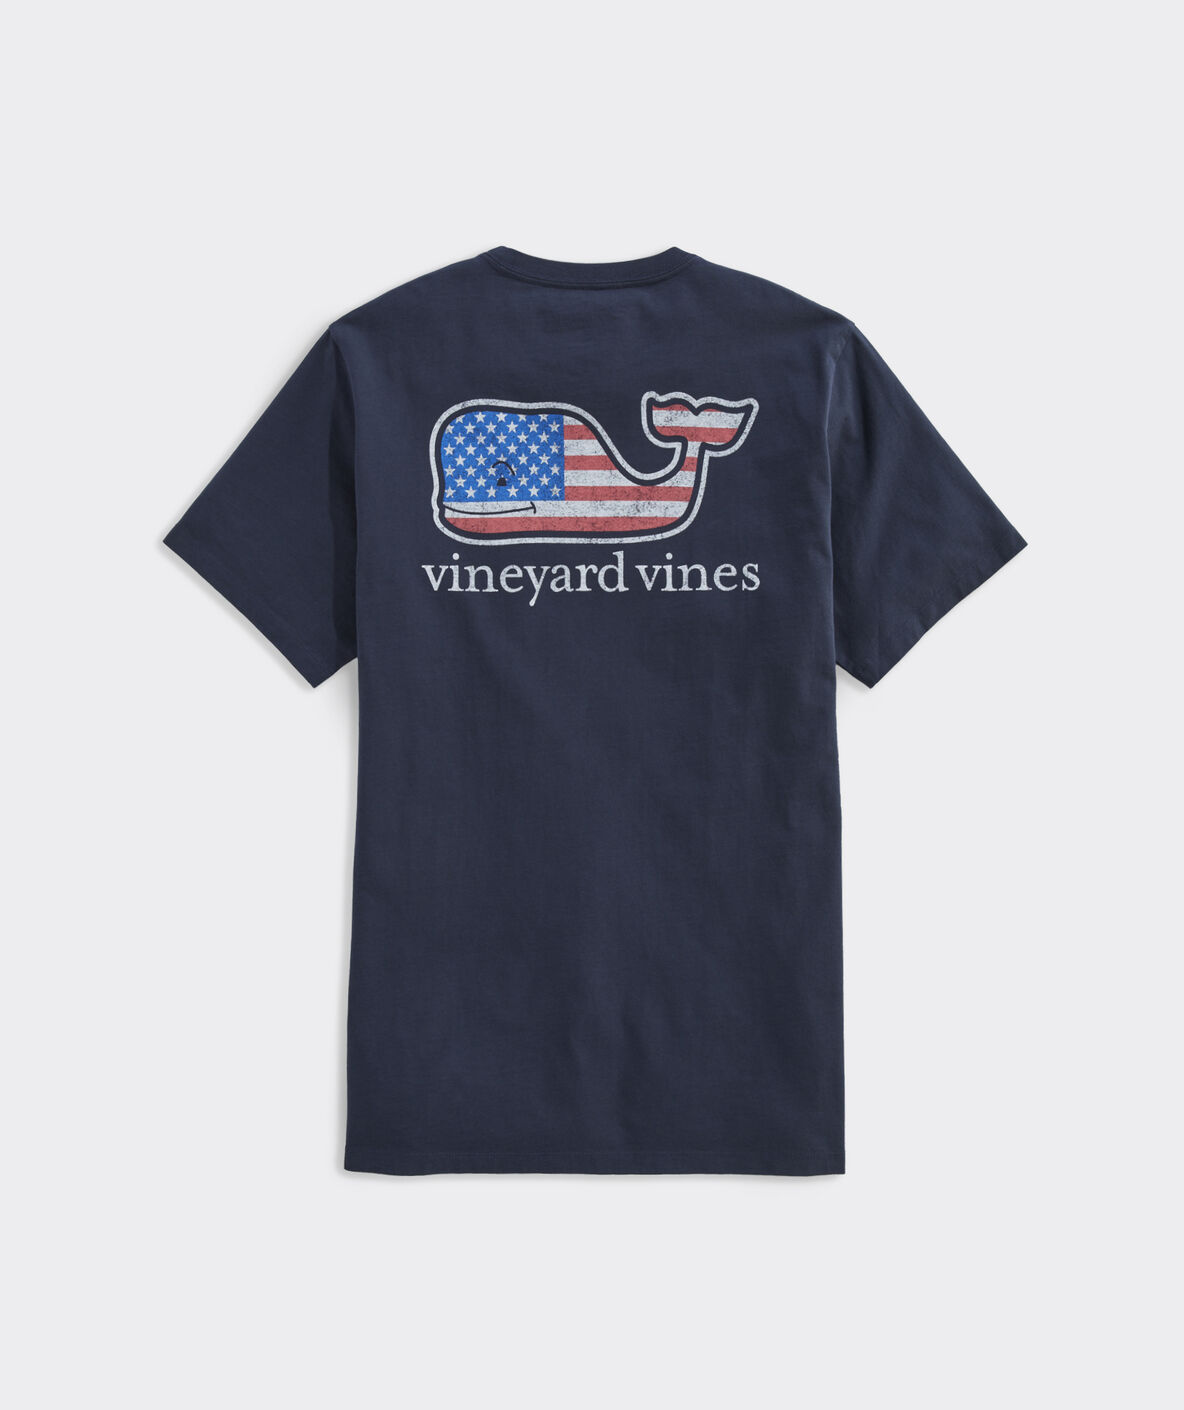 Vineyard Vines Men’s Pocket T-Shirt Whale BoatGraphic Blue Size Small